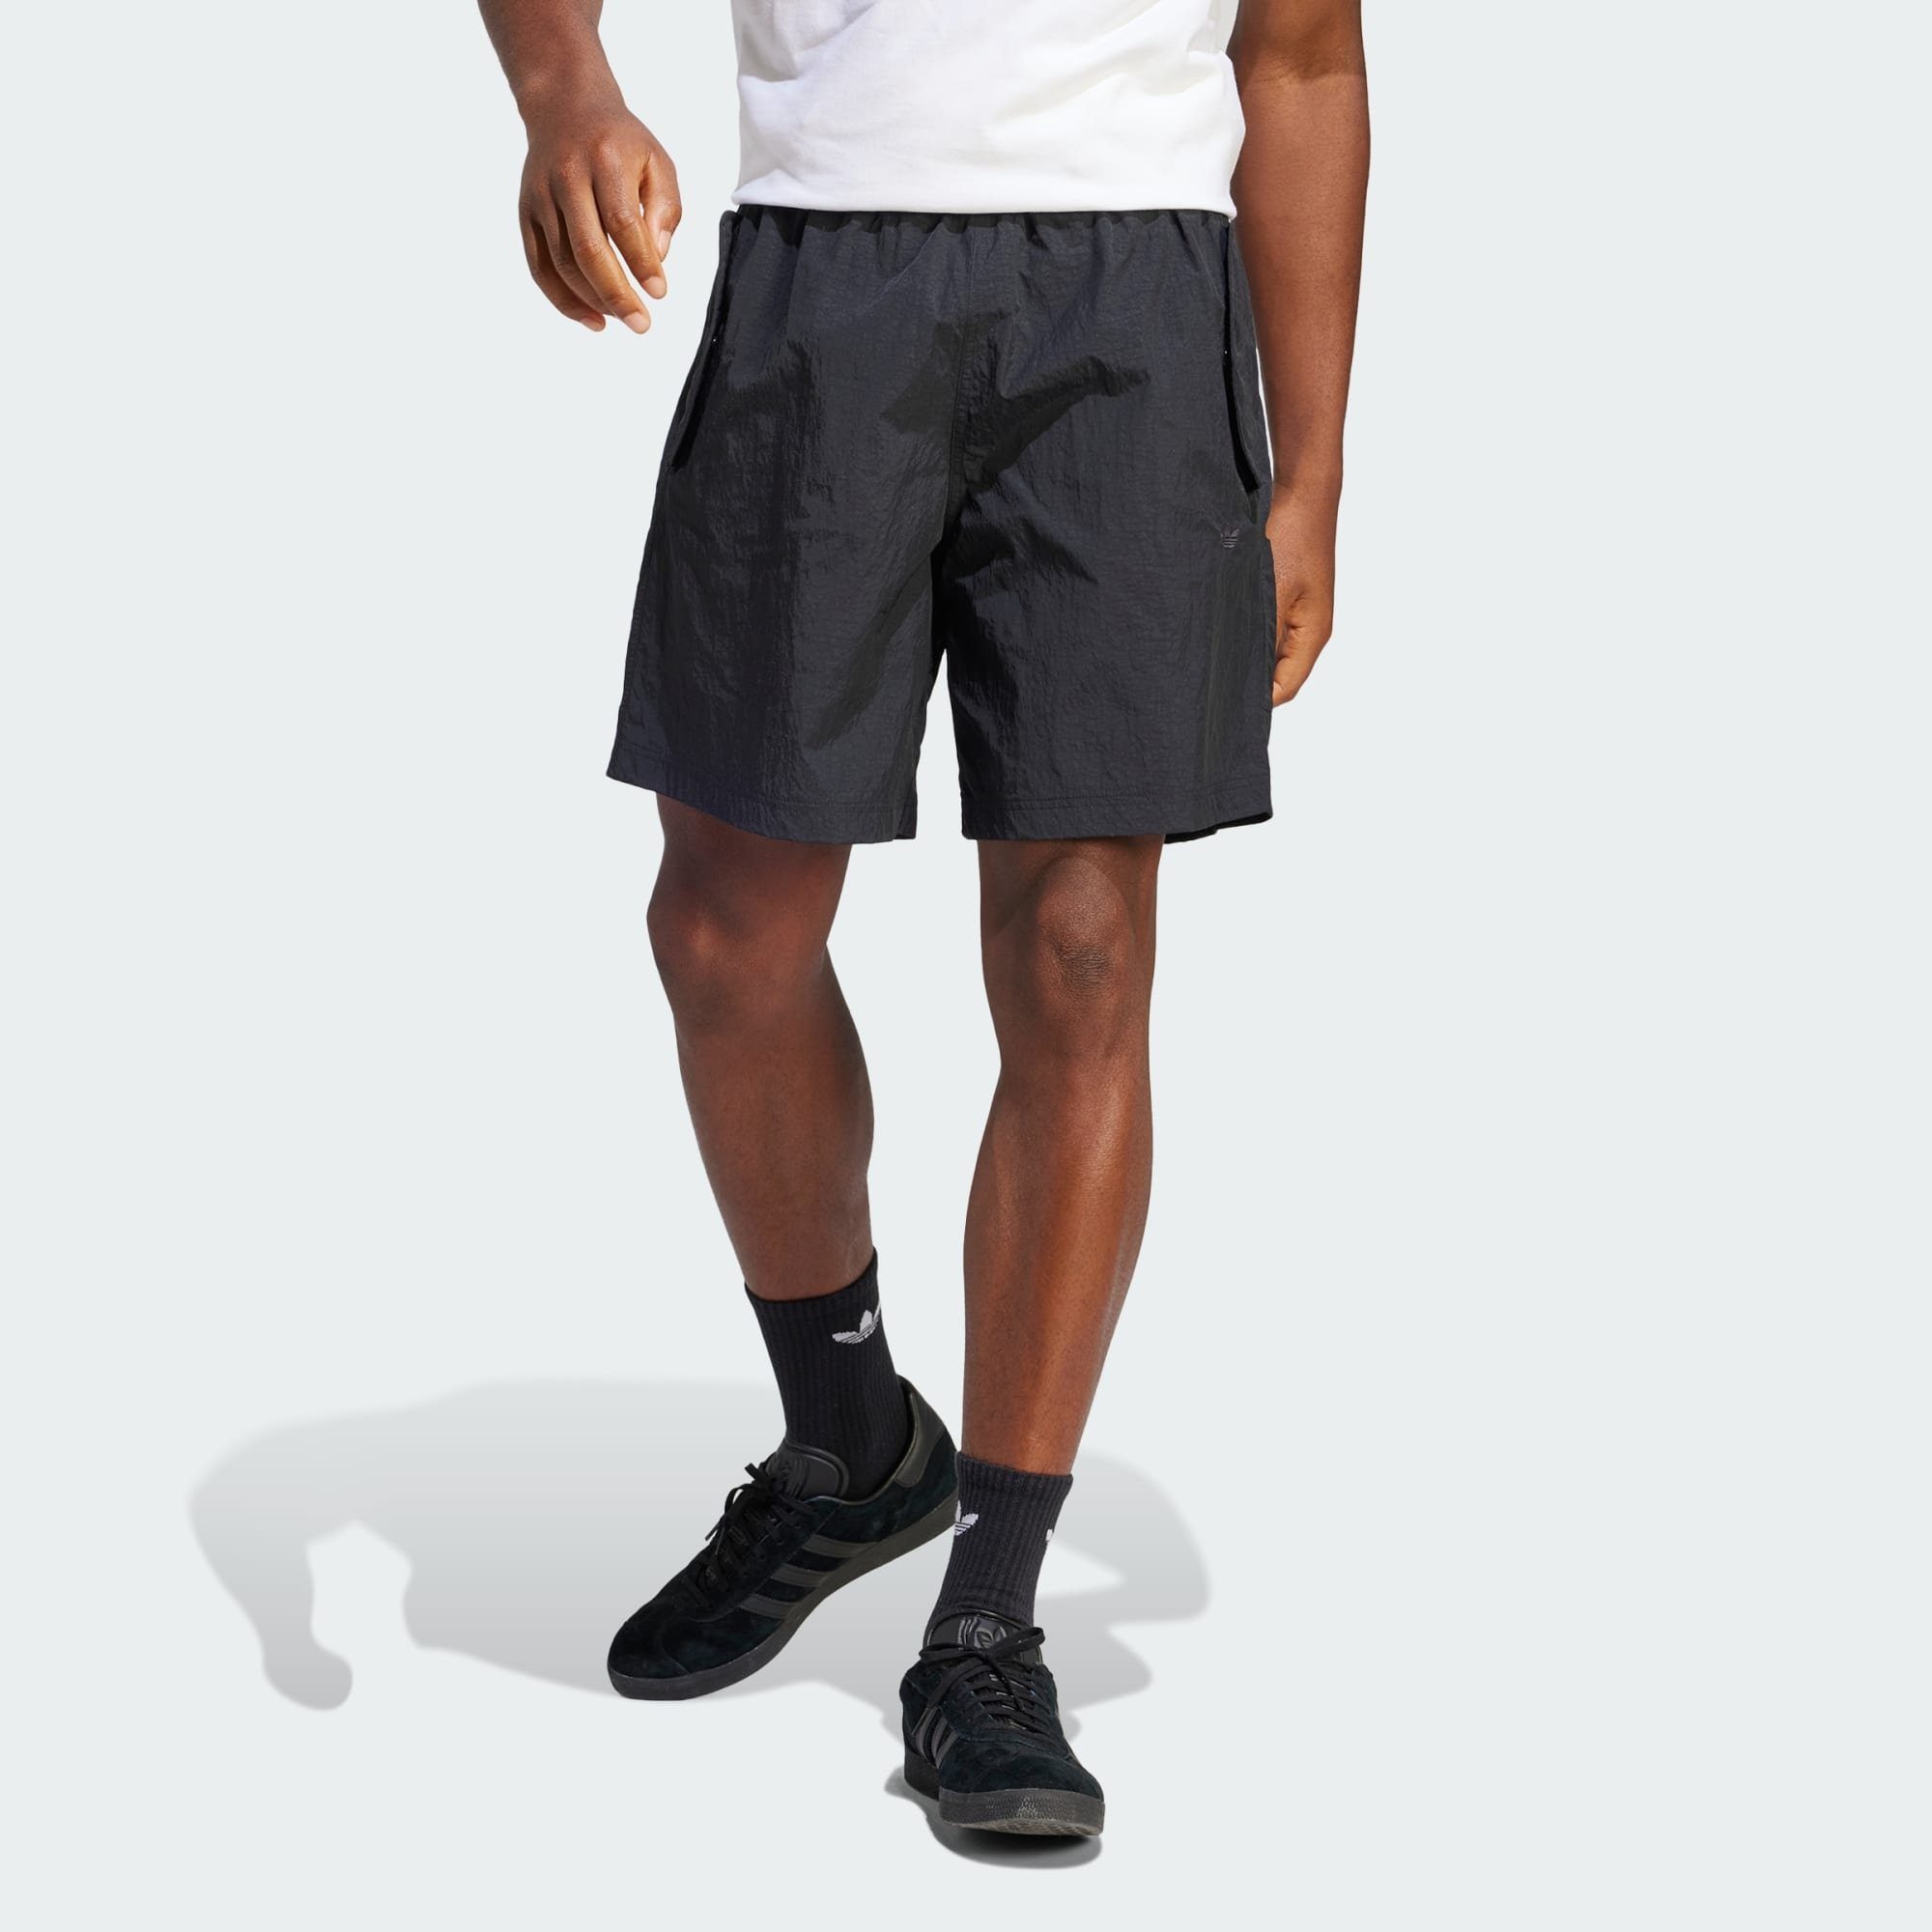 CARGOSHORTS – GENDERNEUTRAL Black ADIDAS adidas ADVENTURE Originals Shorts